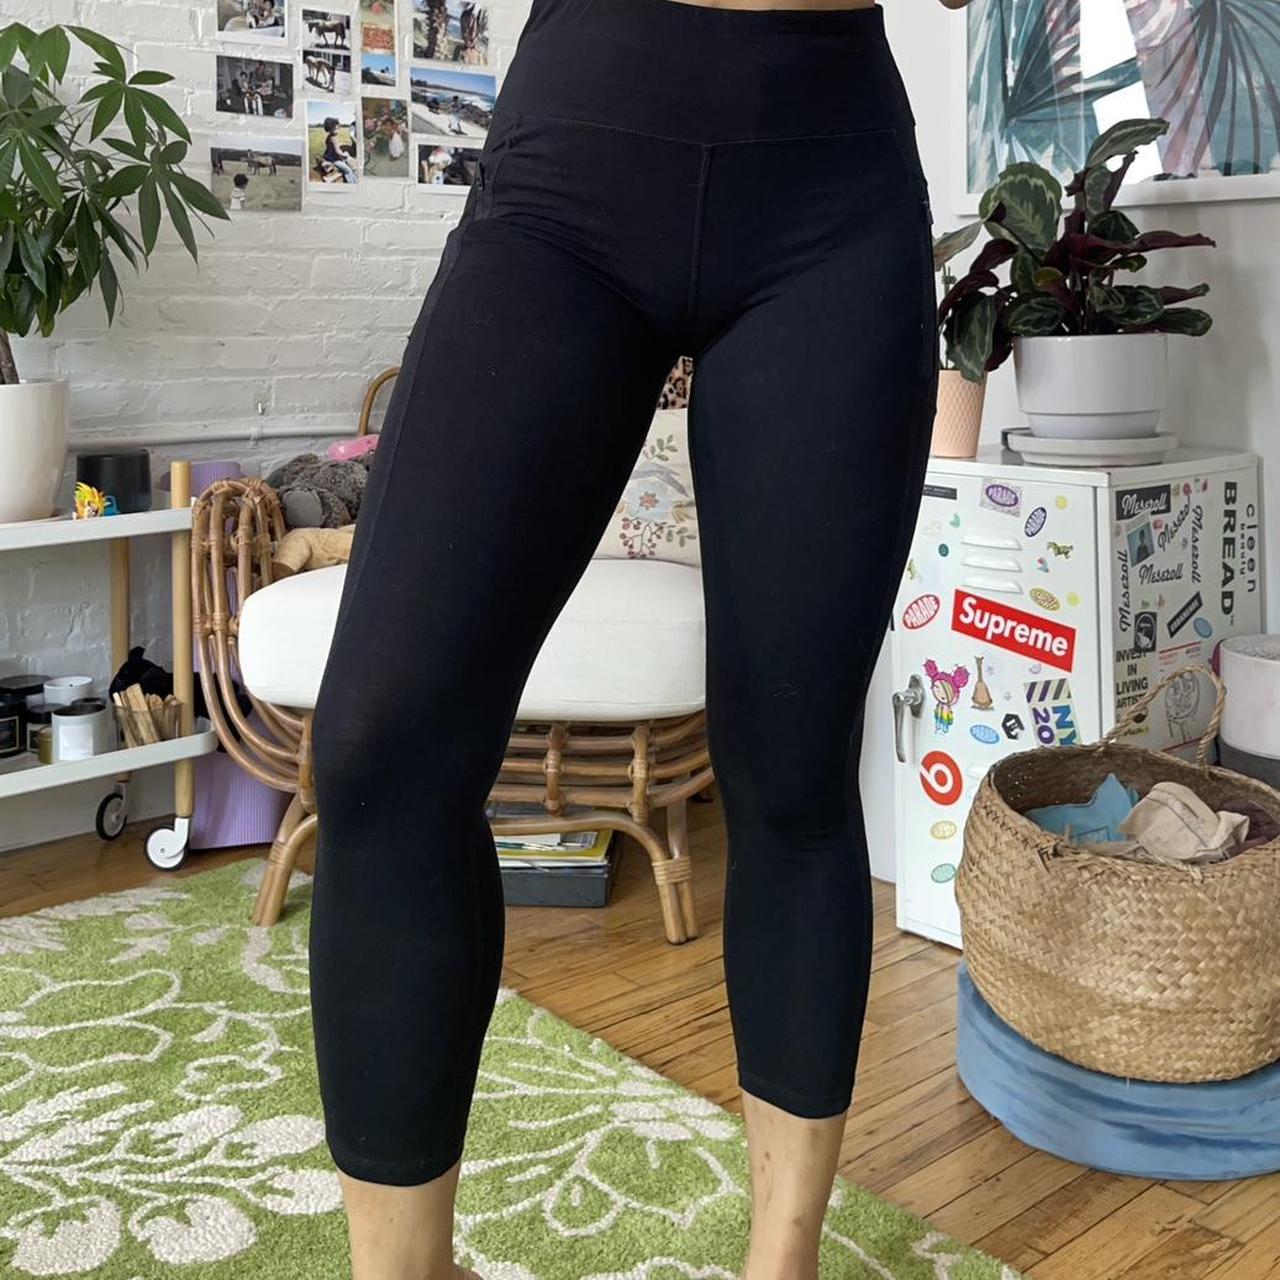 DKNY leggings #DKNY #workout #leggings - Depop